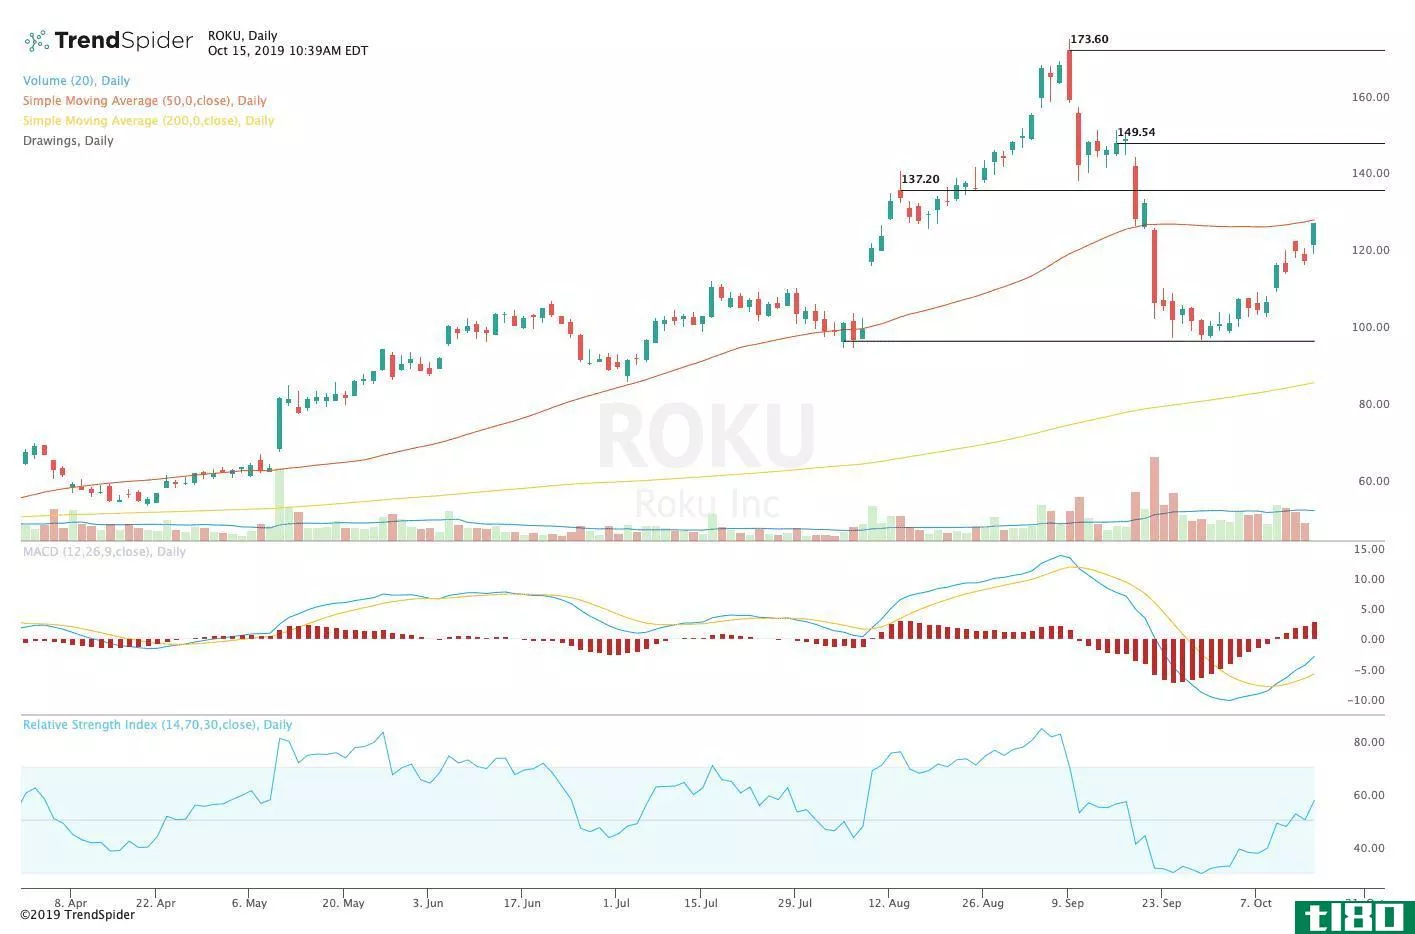 Chart showing the share price performance of Roku, Inc. (ROKU)